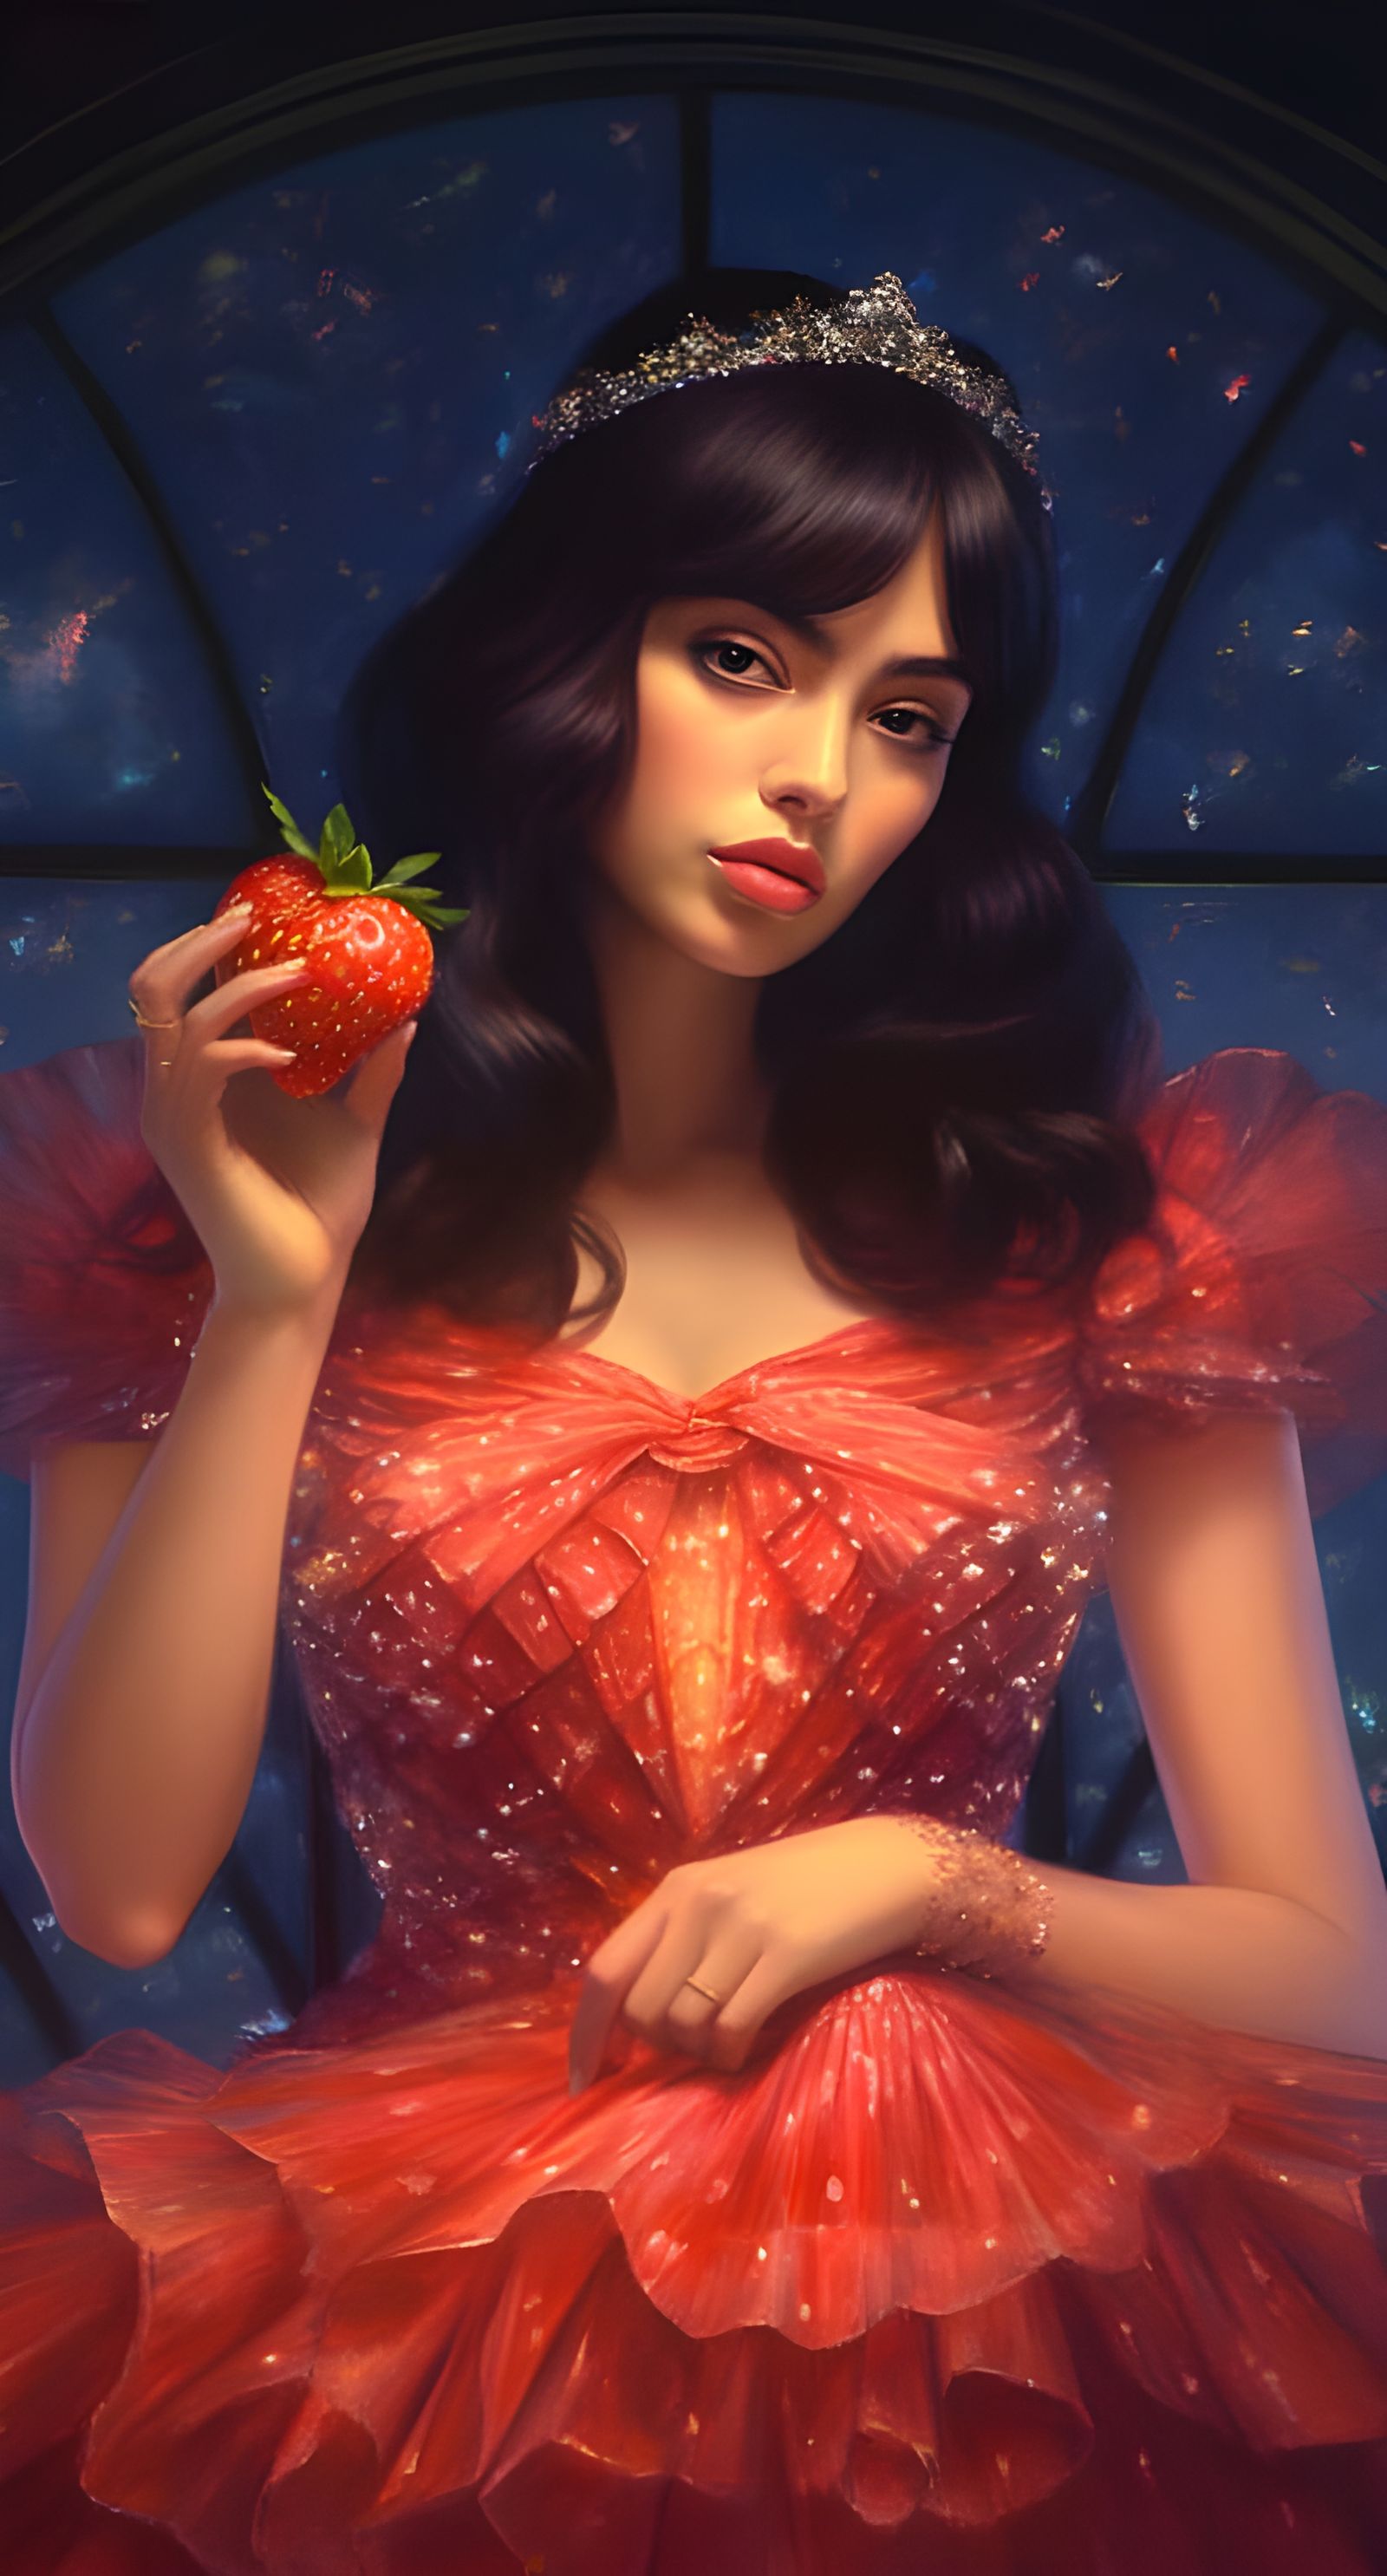 Dua Lipa as a Princess Holding a Strawberry 